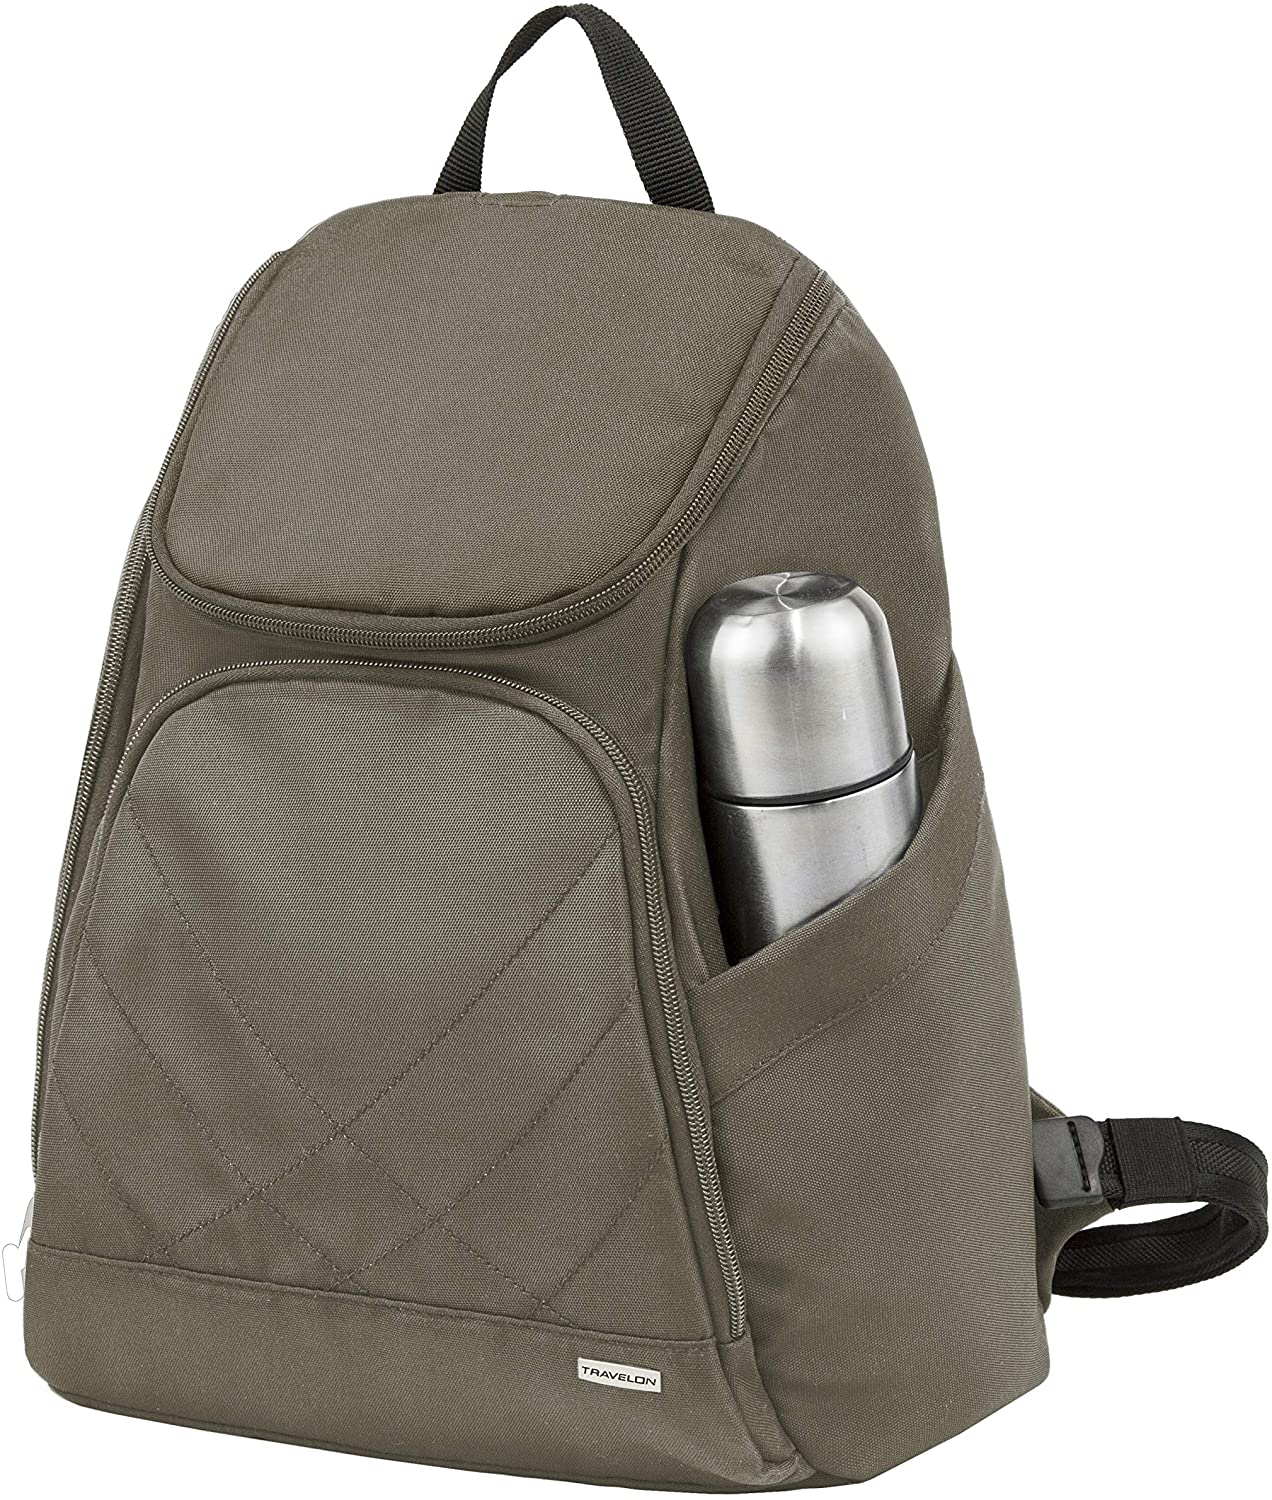 Travelon Anti Theft Classic Backpack, Nutmeg